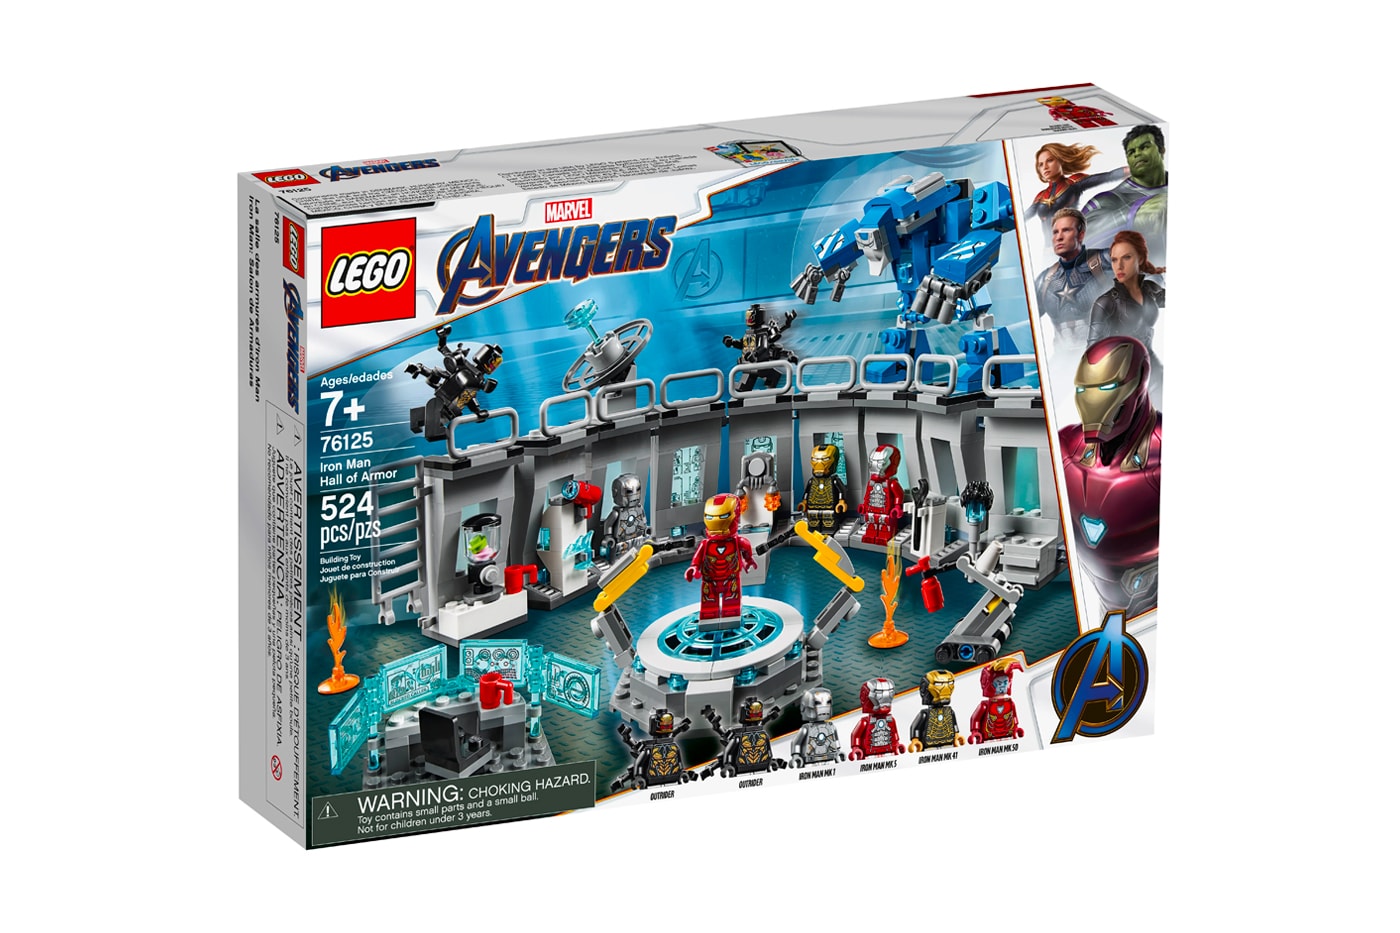 LEGO 'Avengers: Endgame' Series Hong Kong Release marvel studios ironman captain america hulk thanos guardians of the galaxy captain marvel toy collectible figurine memorabilia 